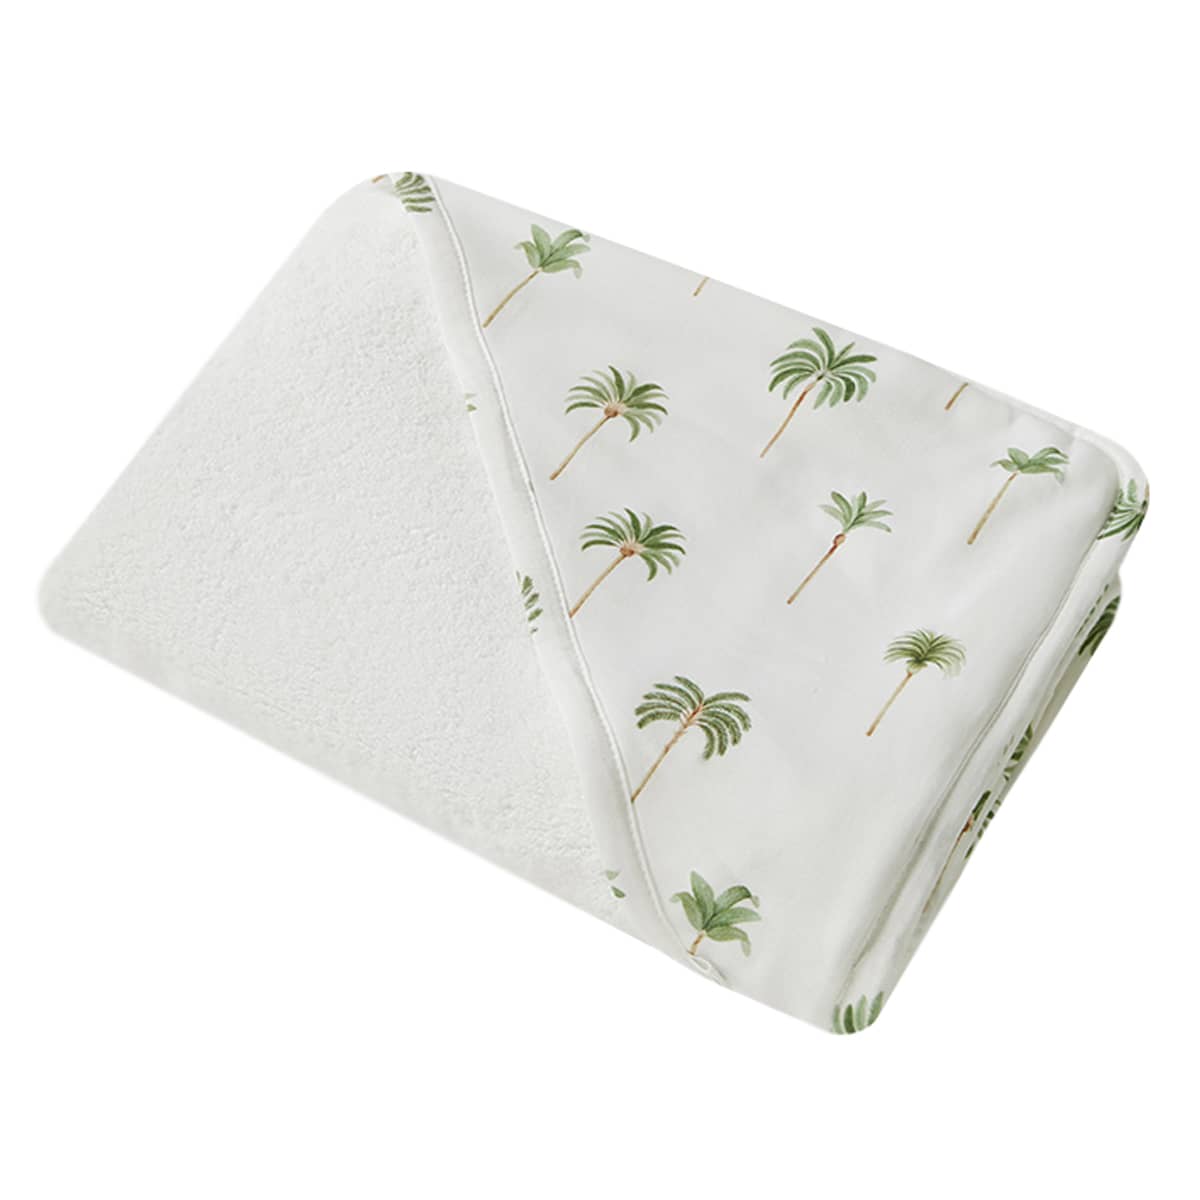 Snuggle Hunny Organic Hooded Baby Towel - Green Palm